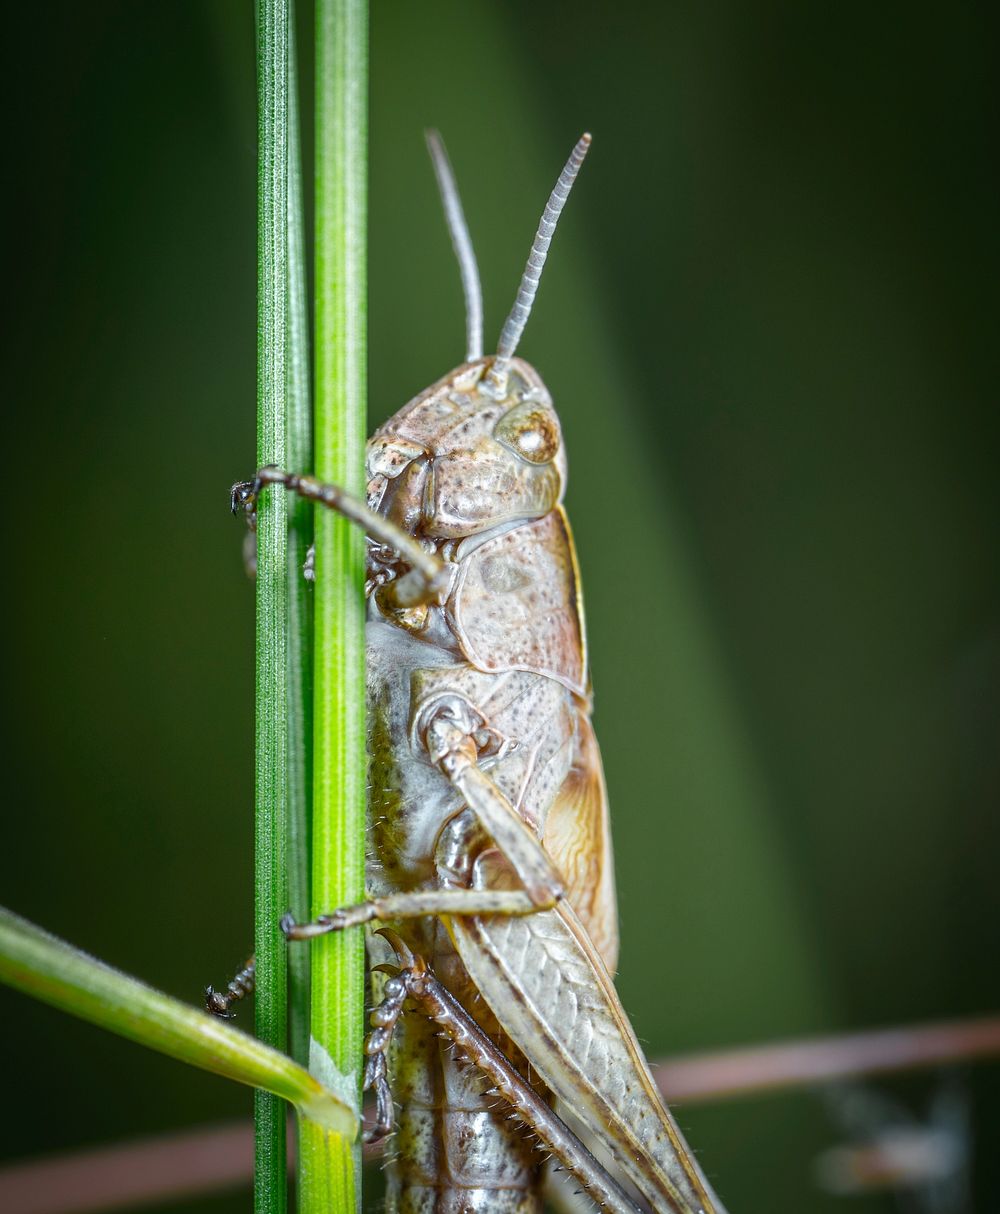 Free close up yellow grasshopper image, public domain animal CC0 photo.